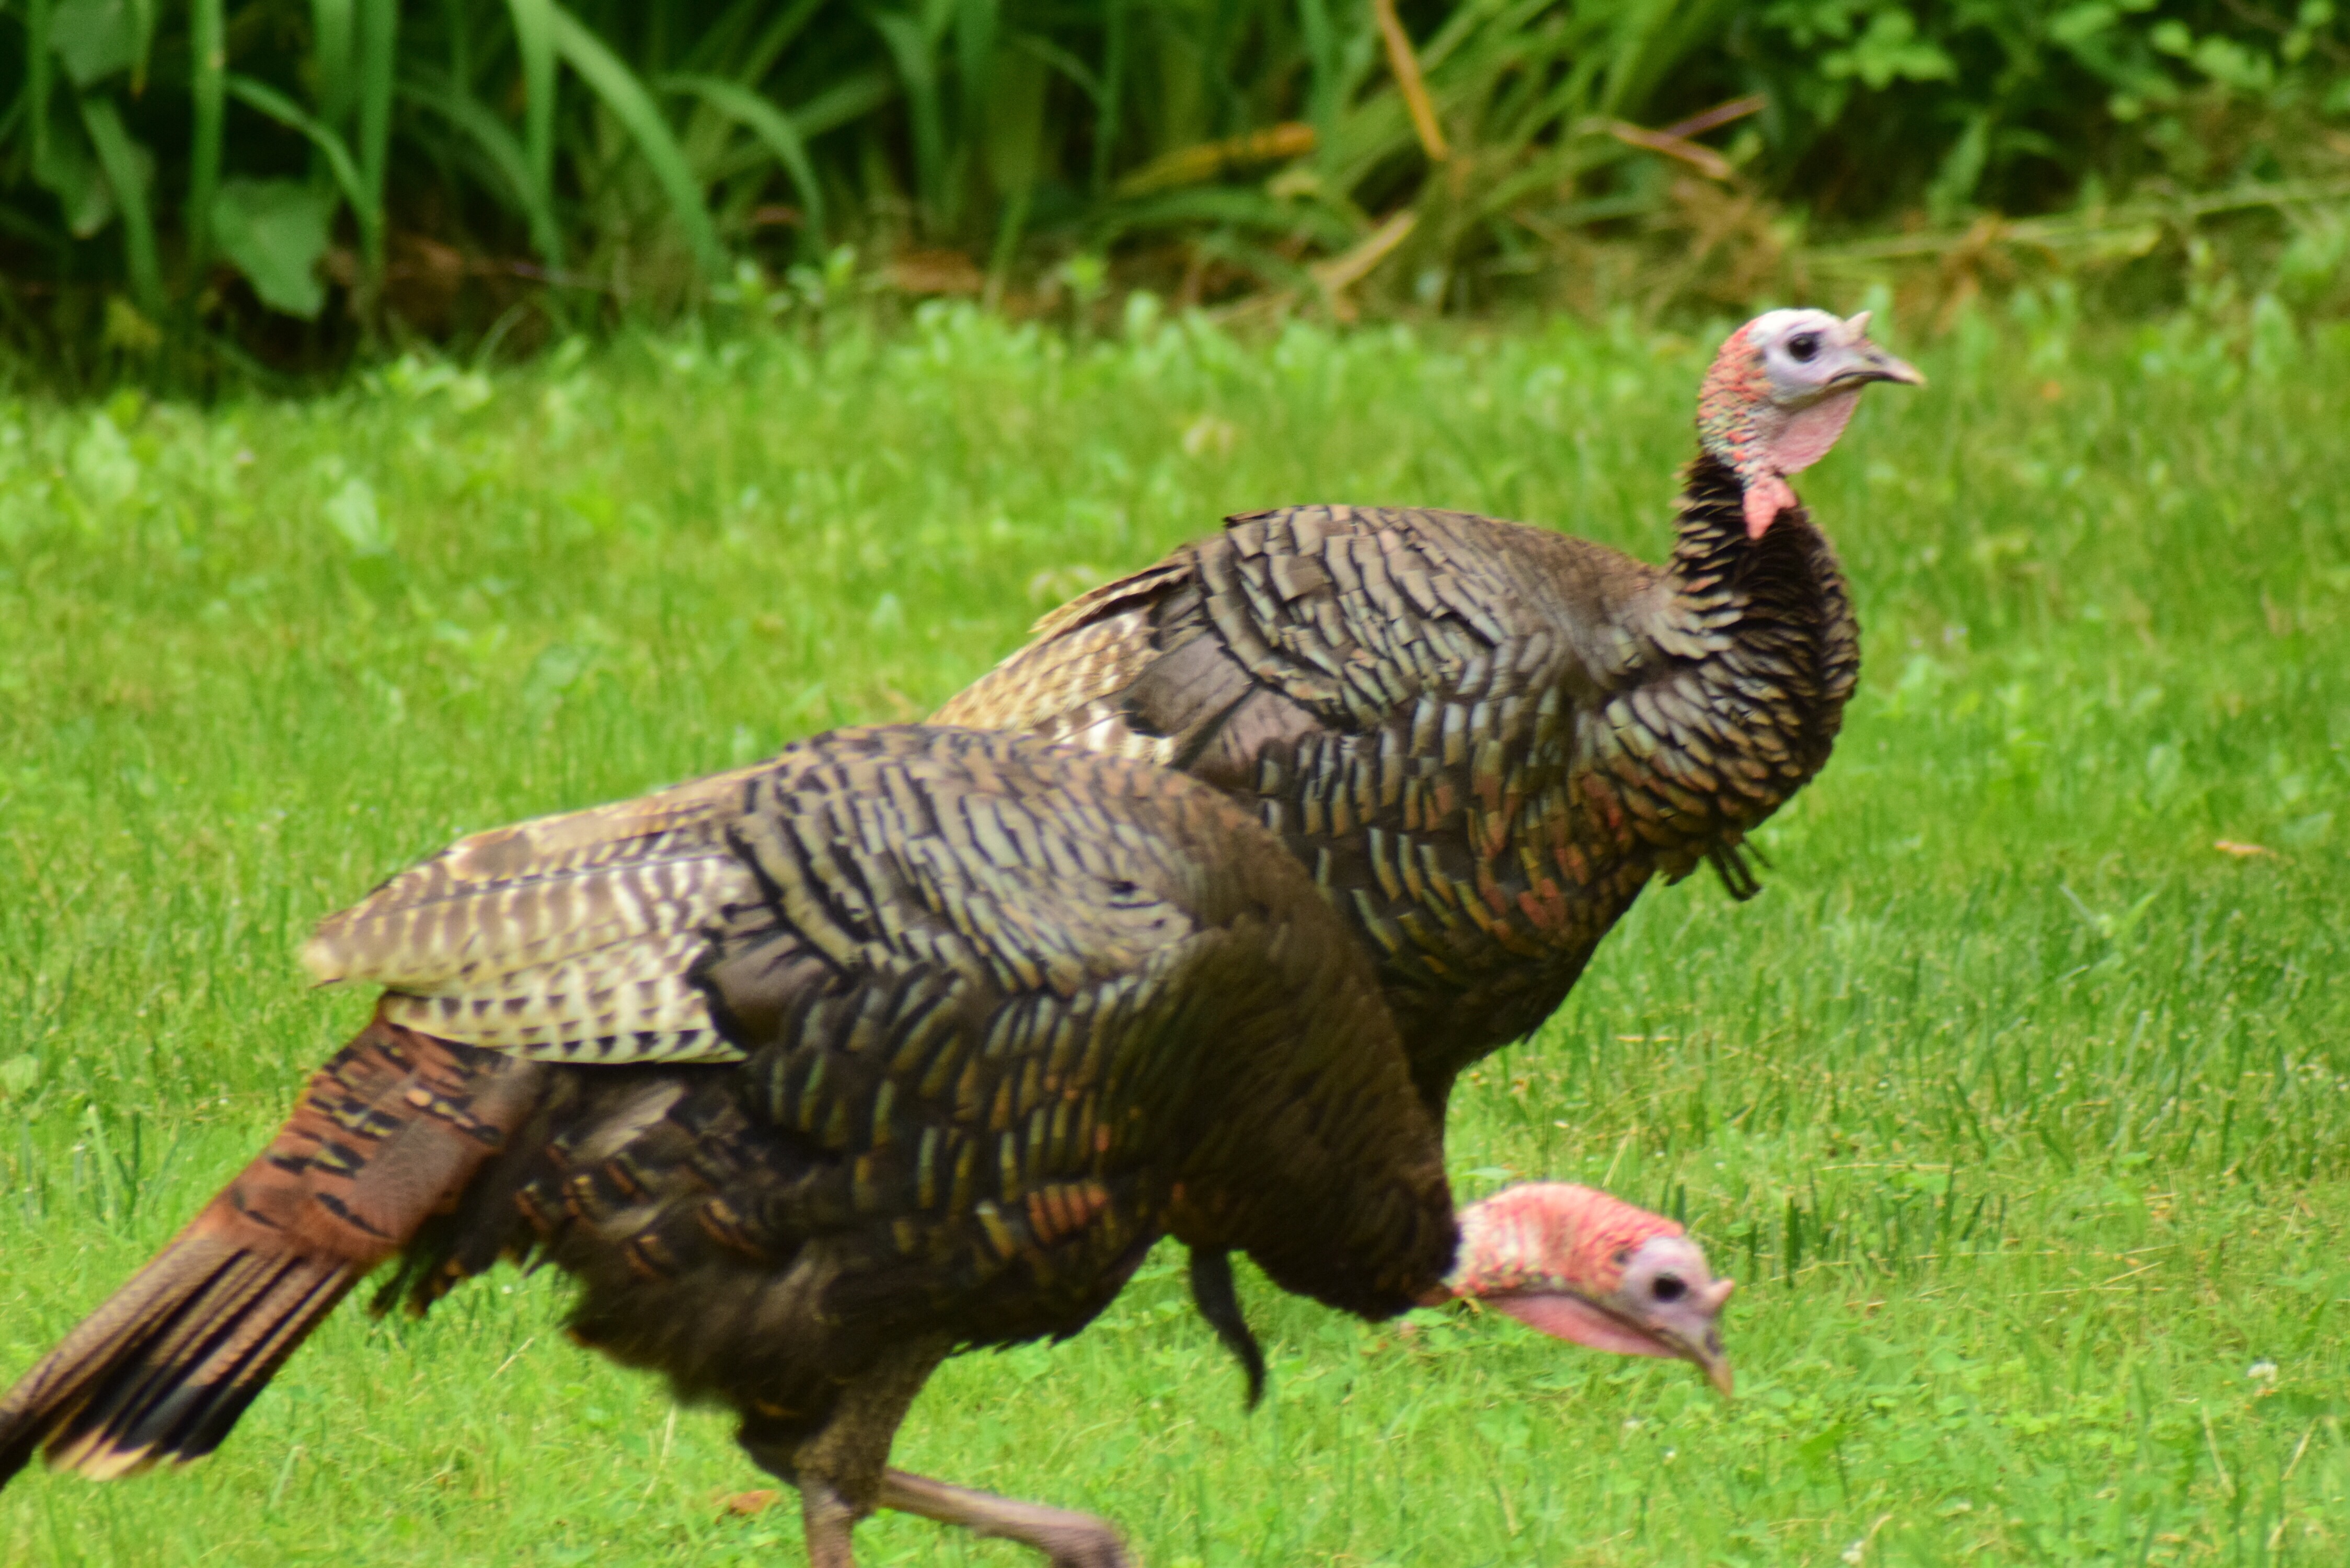 The Unseen Turmoil: A Cruel Thanksgiving for Turkeys